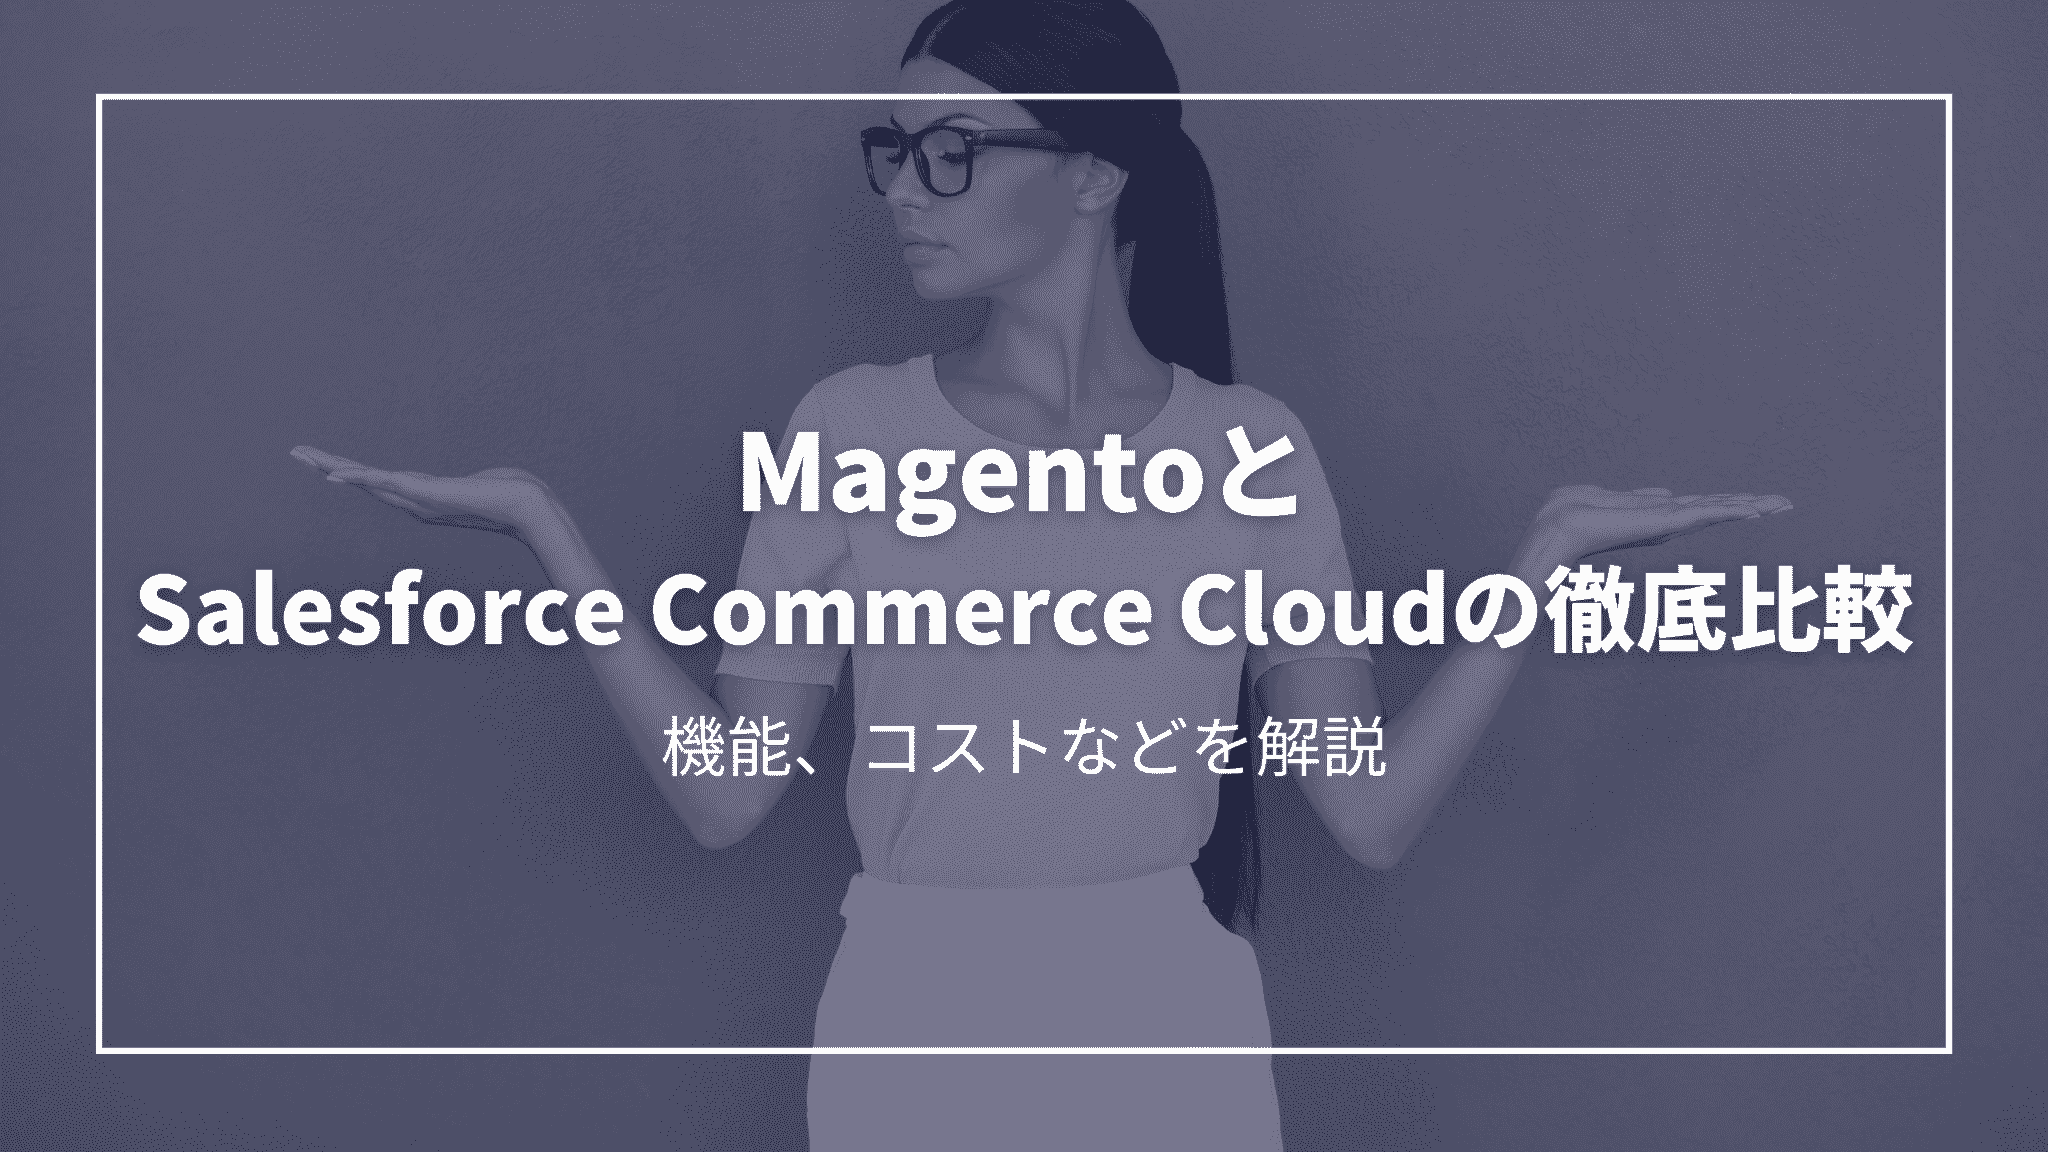 MagentoとSalesforce Commerce Cloudの徹底比較：機能、コストなどを解説